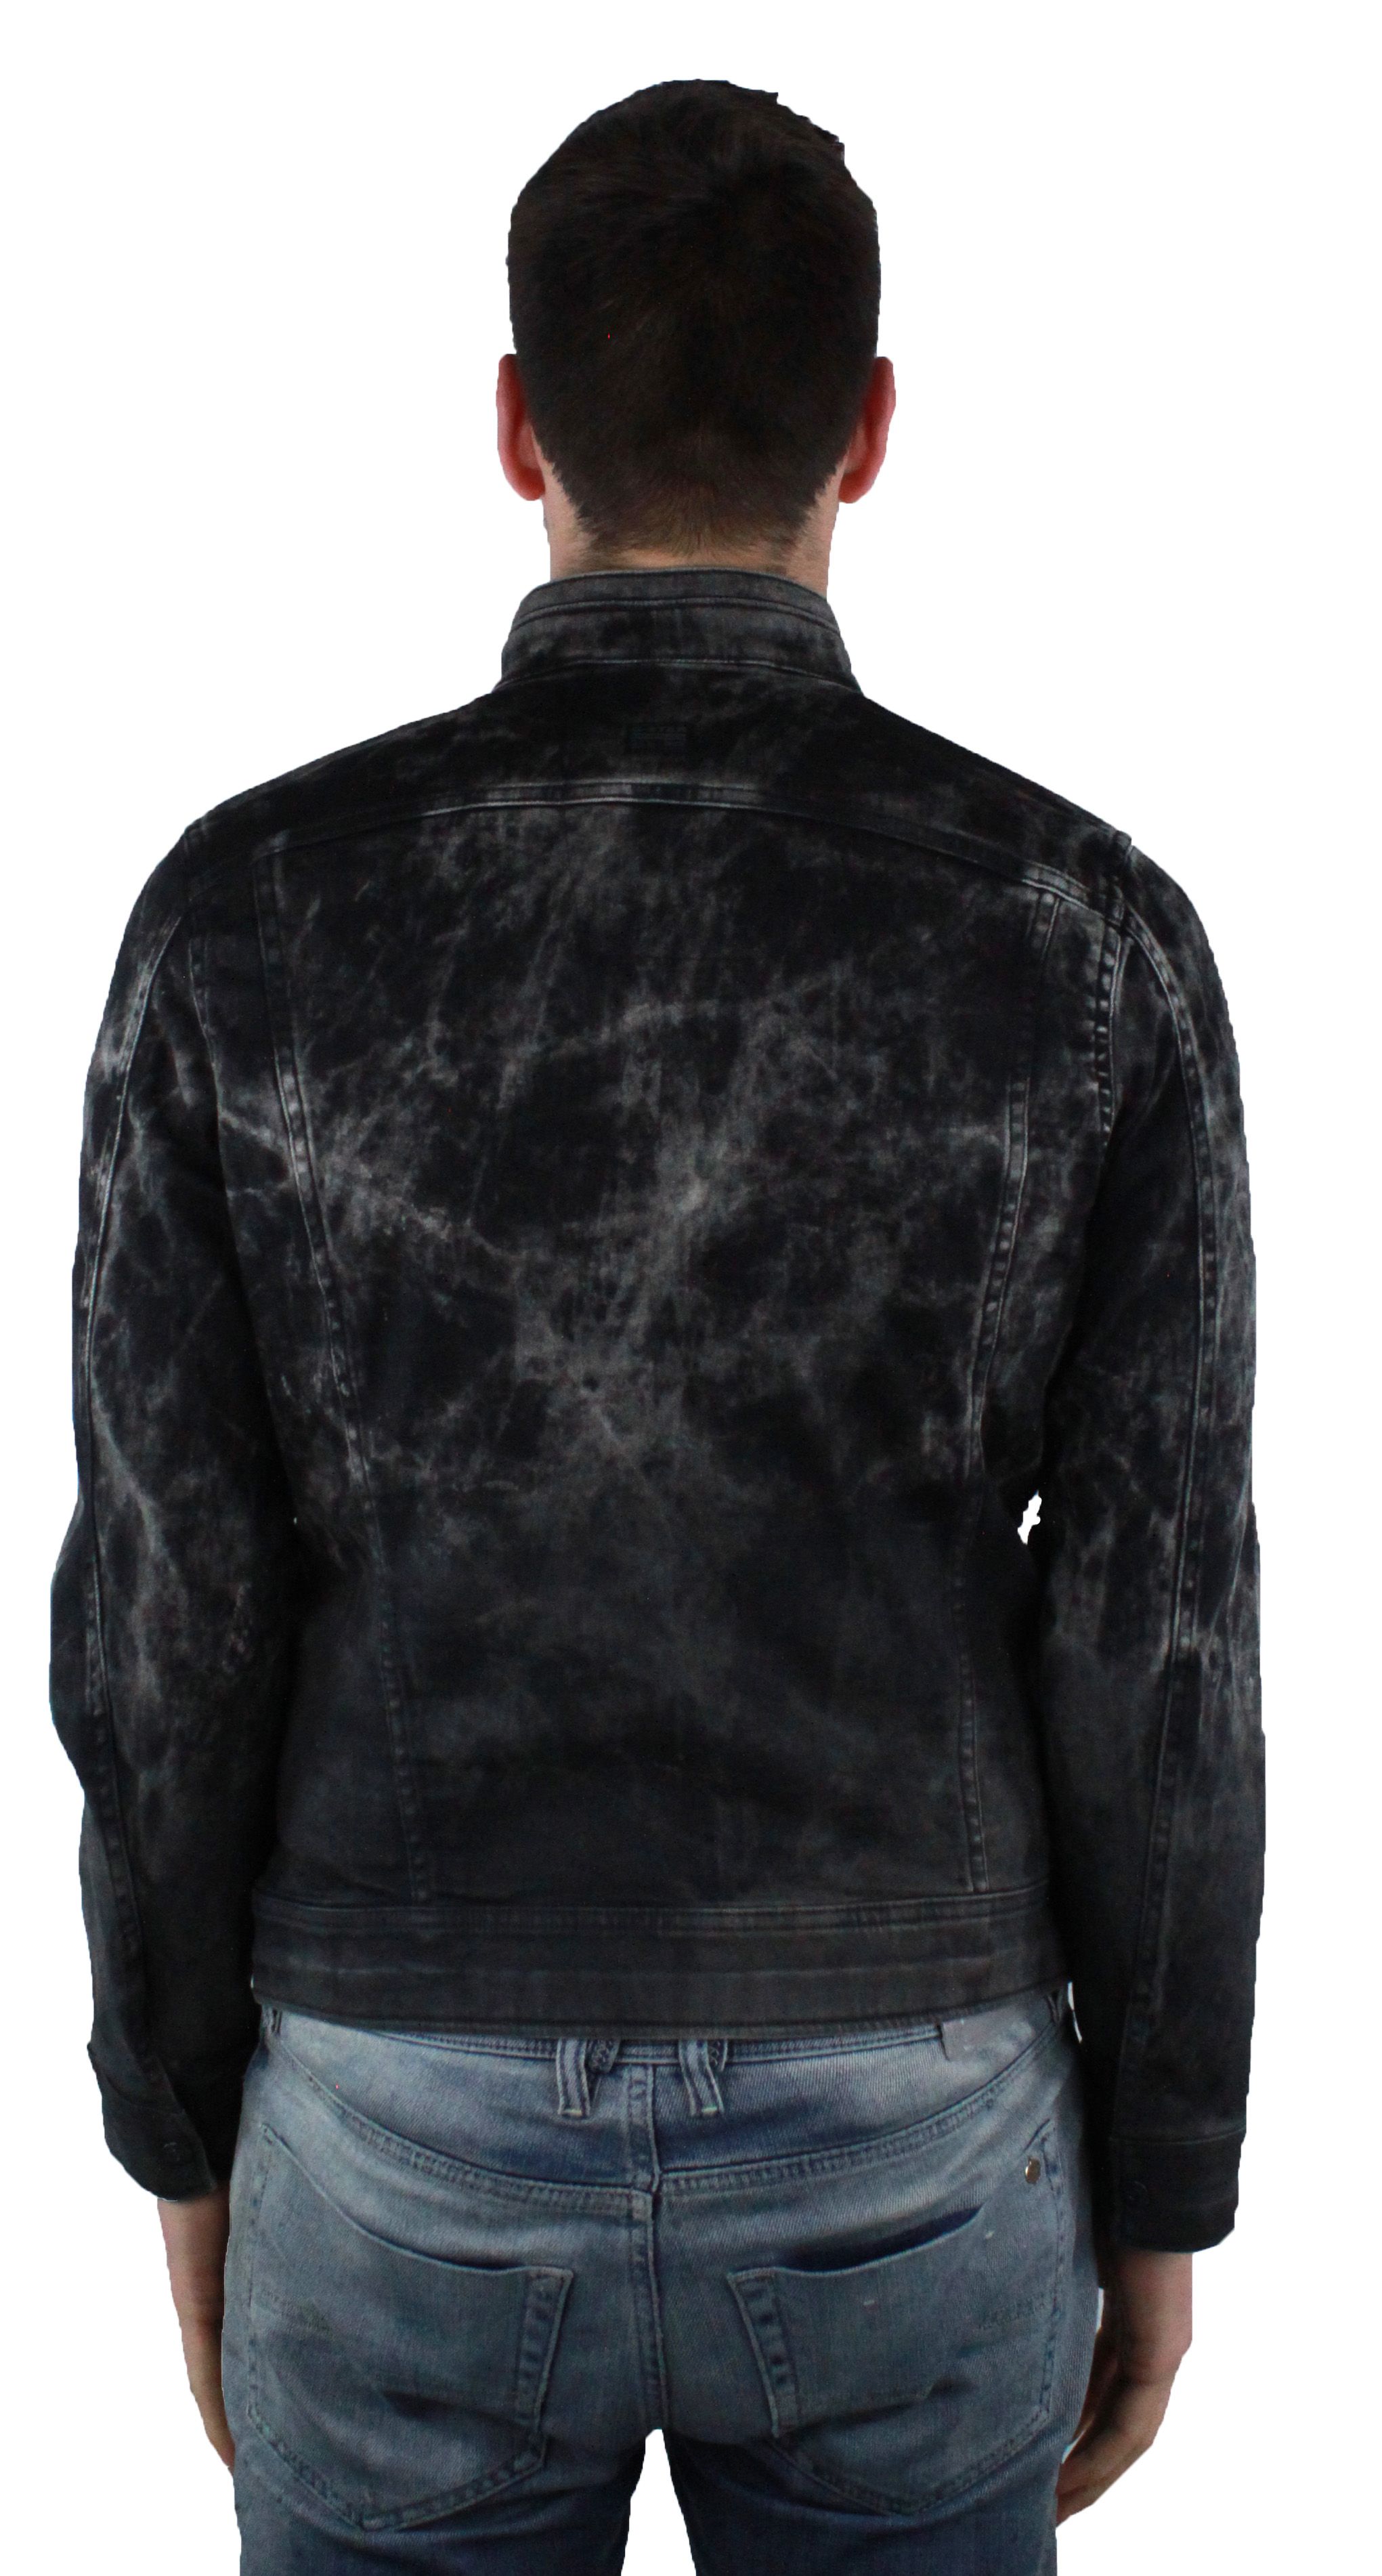 G-Star Raw Arc Zip Deconstructed Vintaged Aged Cobler Jacket. G-Star Slim Black Denim Jacket. Chinese Collar with Central Zip Opening. D02035.6009.7090. 35% Cotton, 35% Lyocell, 28% Polyester, 2% Elastane. Stretch Denim